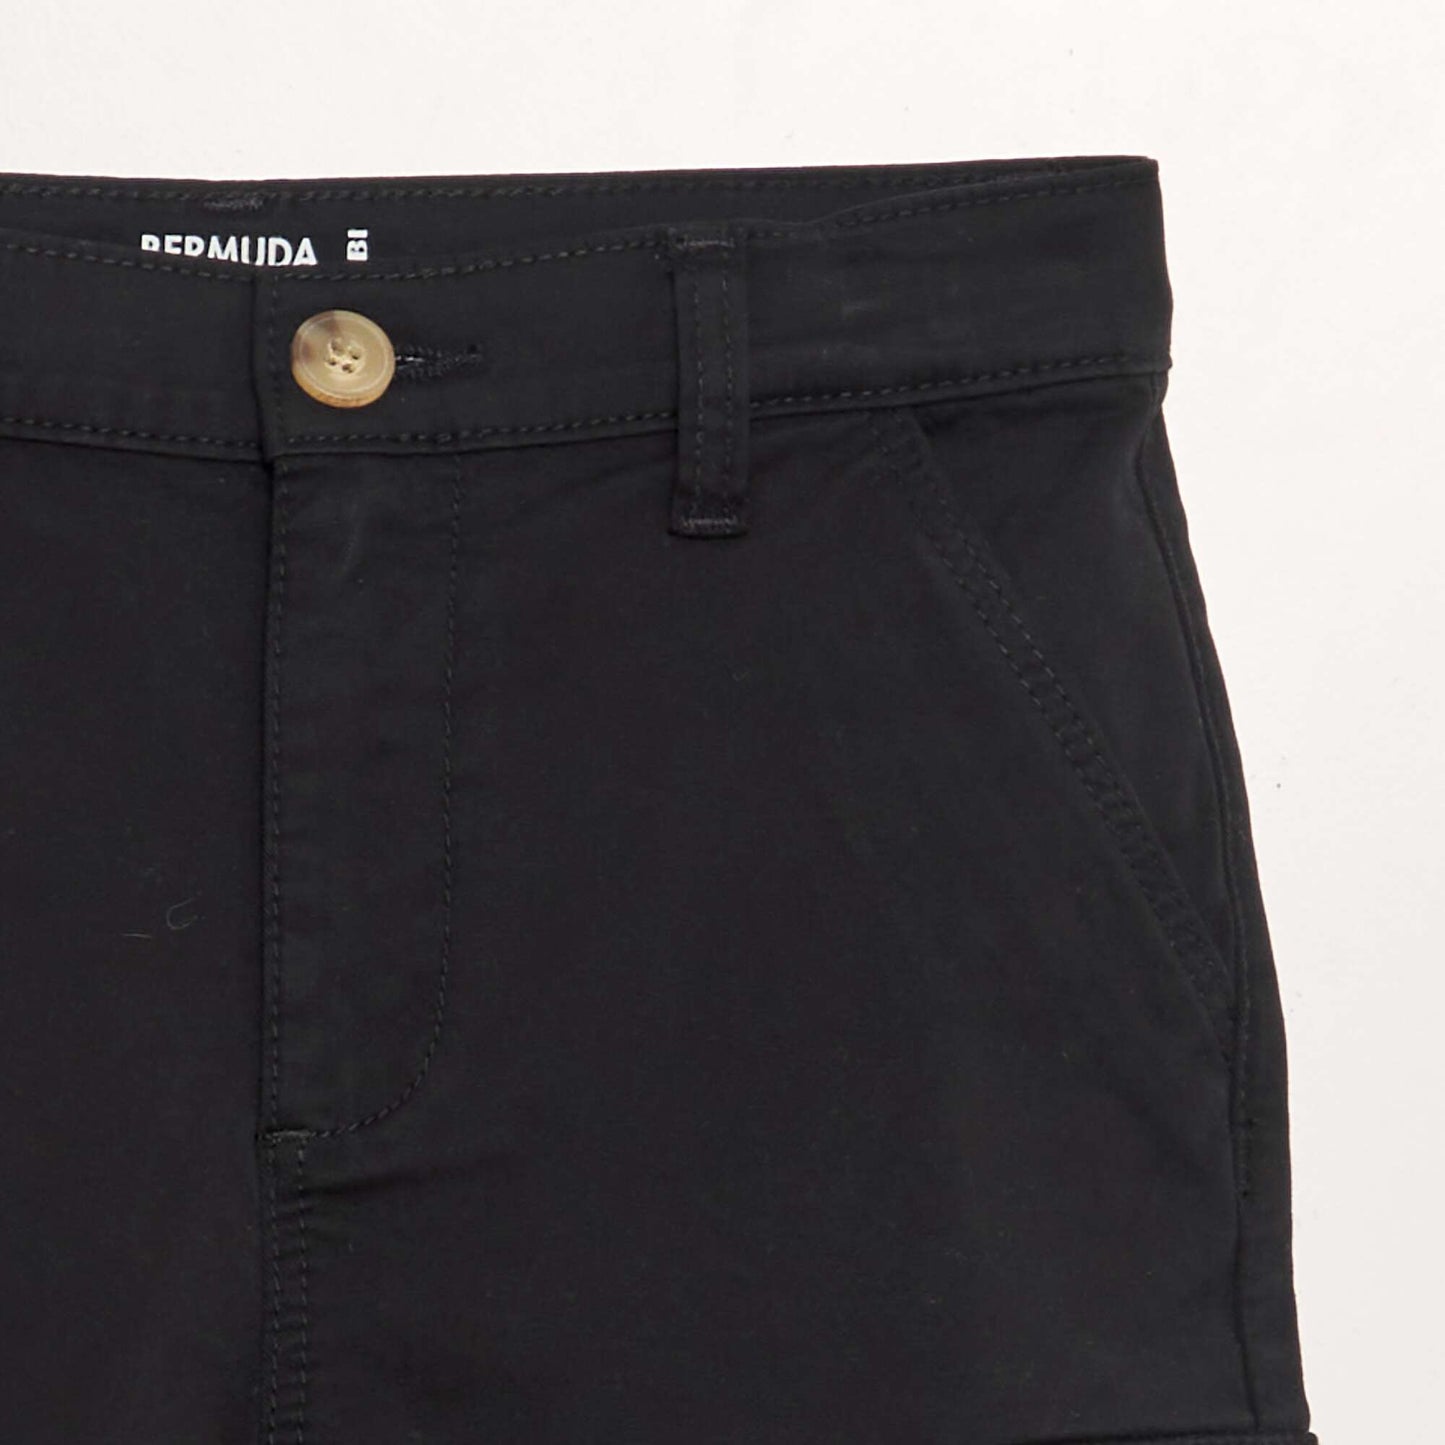 Bermuda shorts with adjustable waist and pockets black